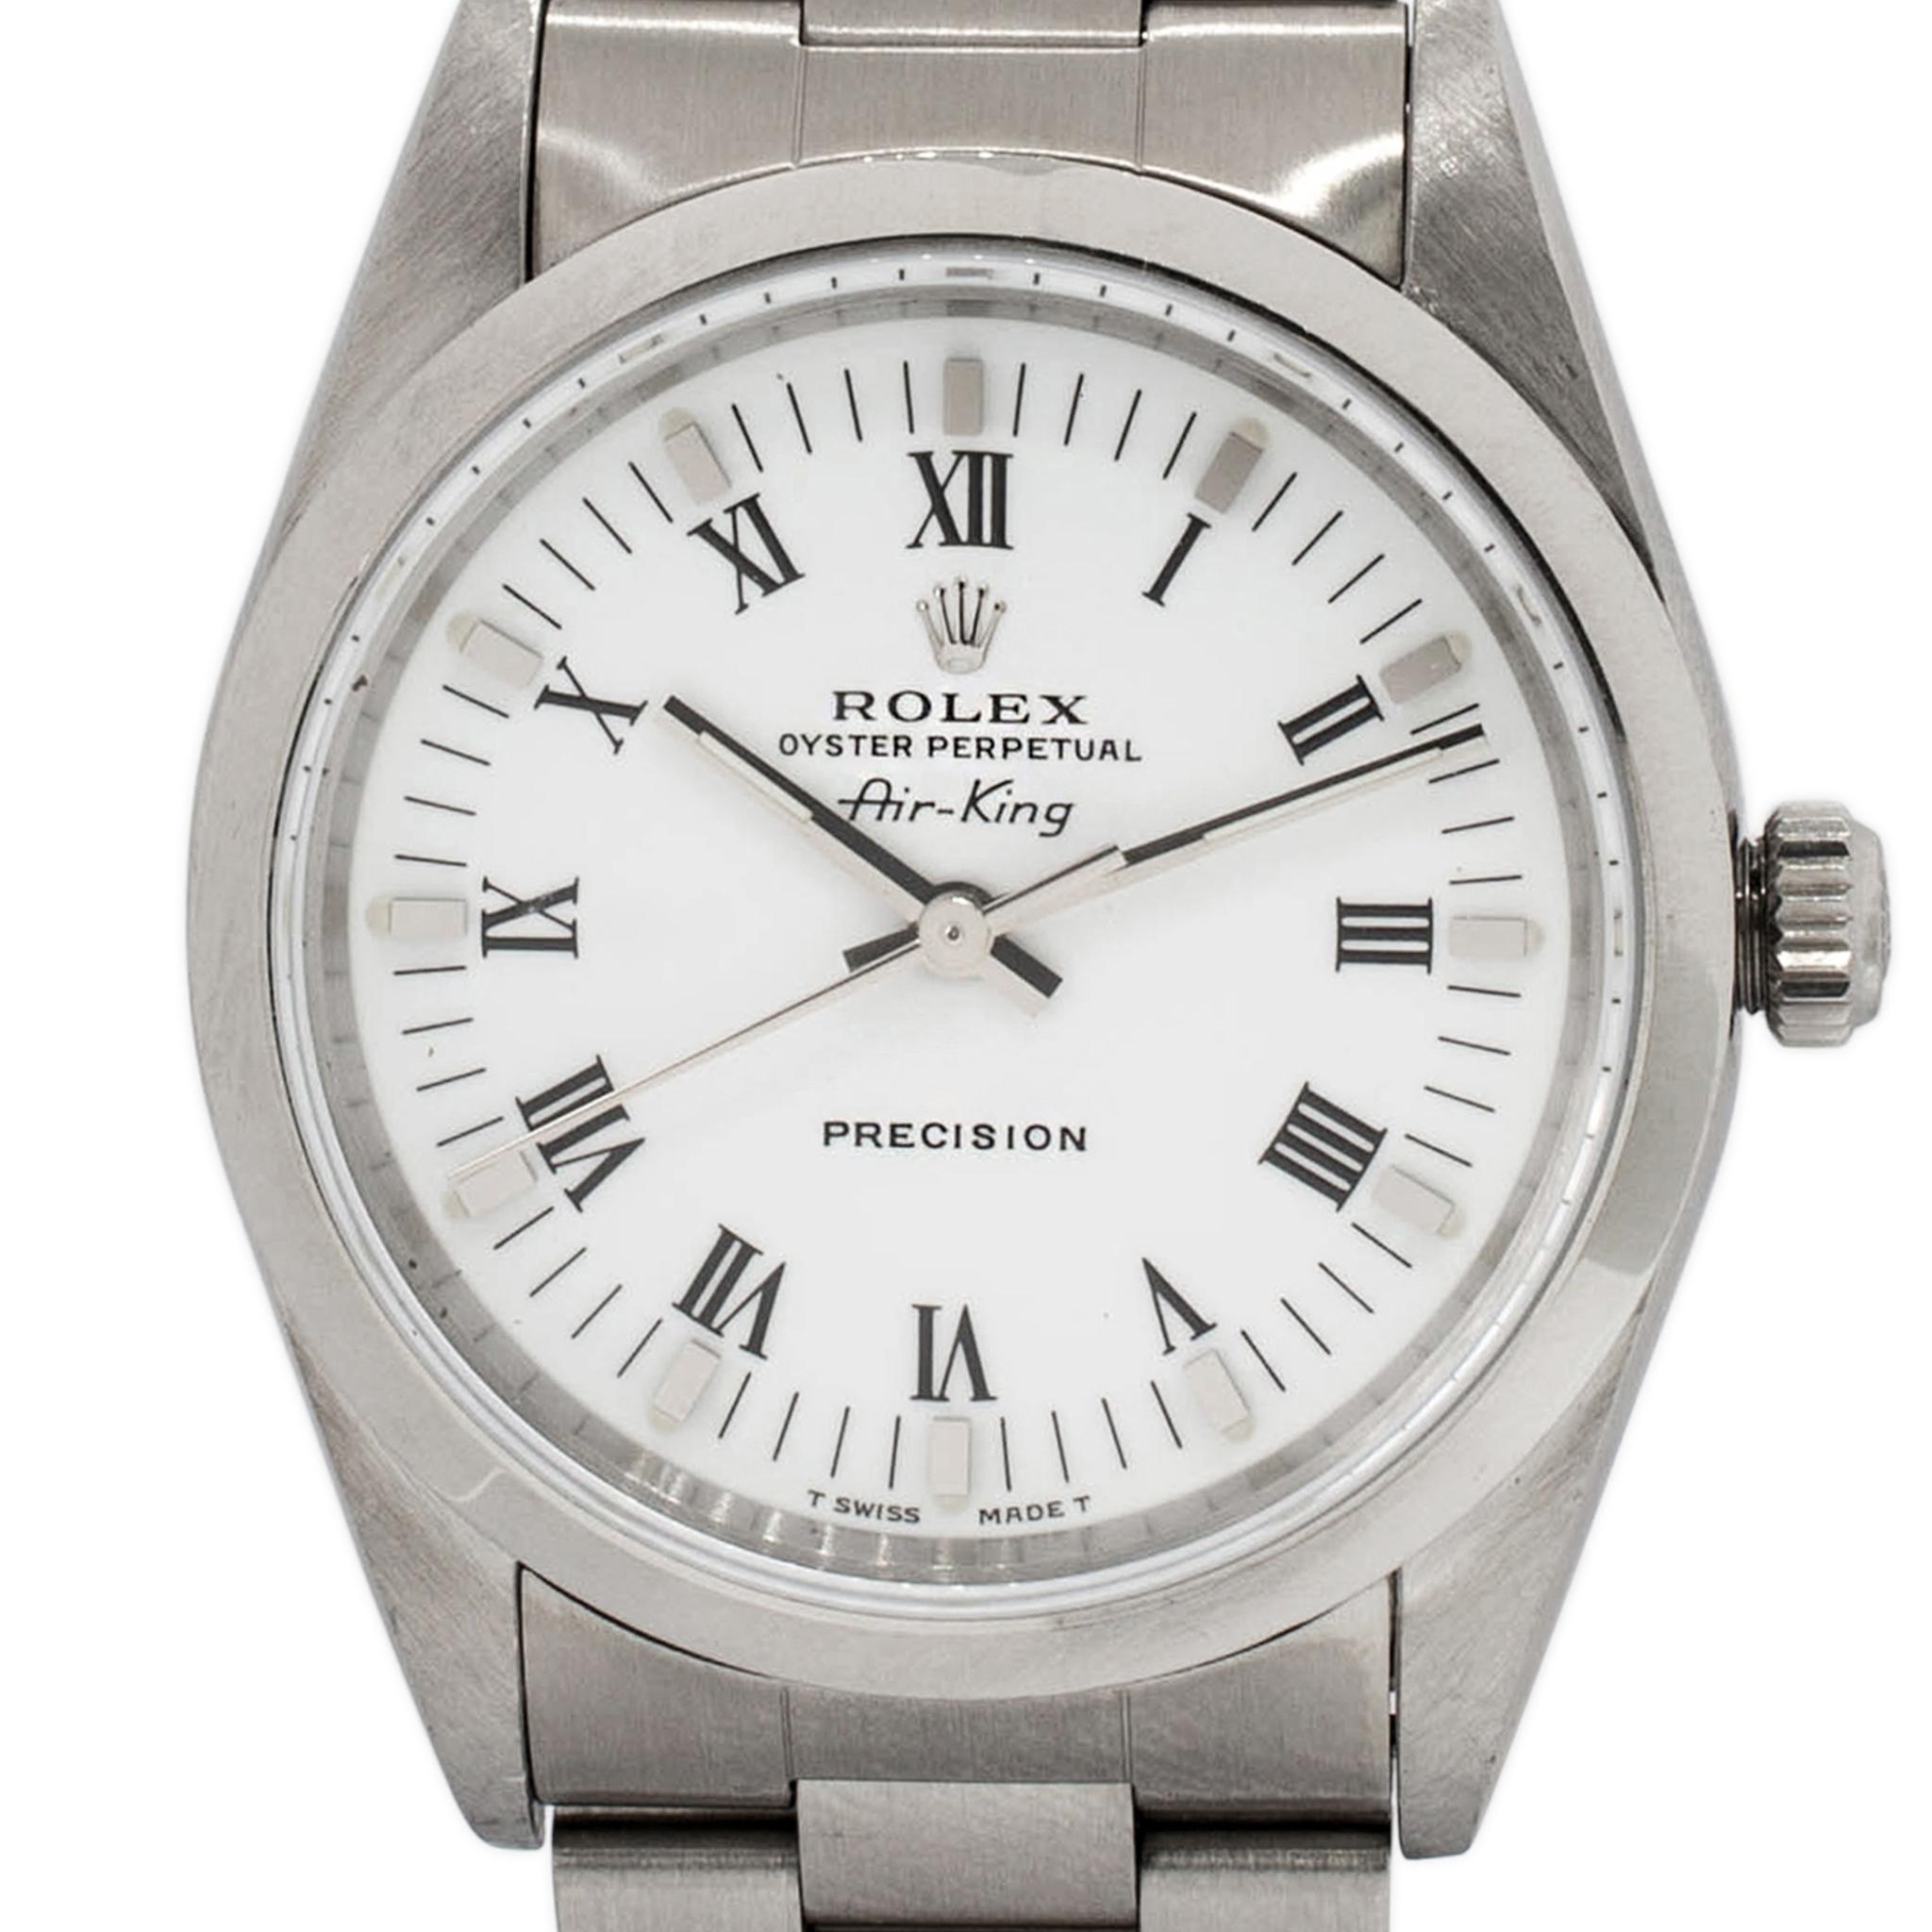 Brand: Rolex

Gender: Mens

Metal Type: Stainless Steel

Diameter: 34.00mm

Bracelet Width: 18.6 mm

Bracelet Length: 6.50 inches

Weight: 92.50 grams

Rolex Swiss made Stainless steel watch. The 